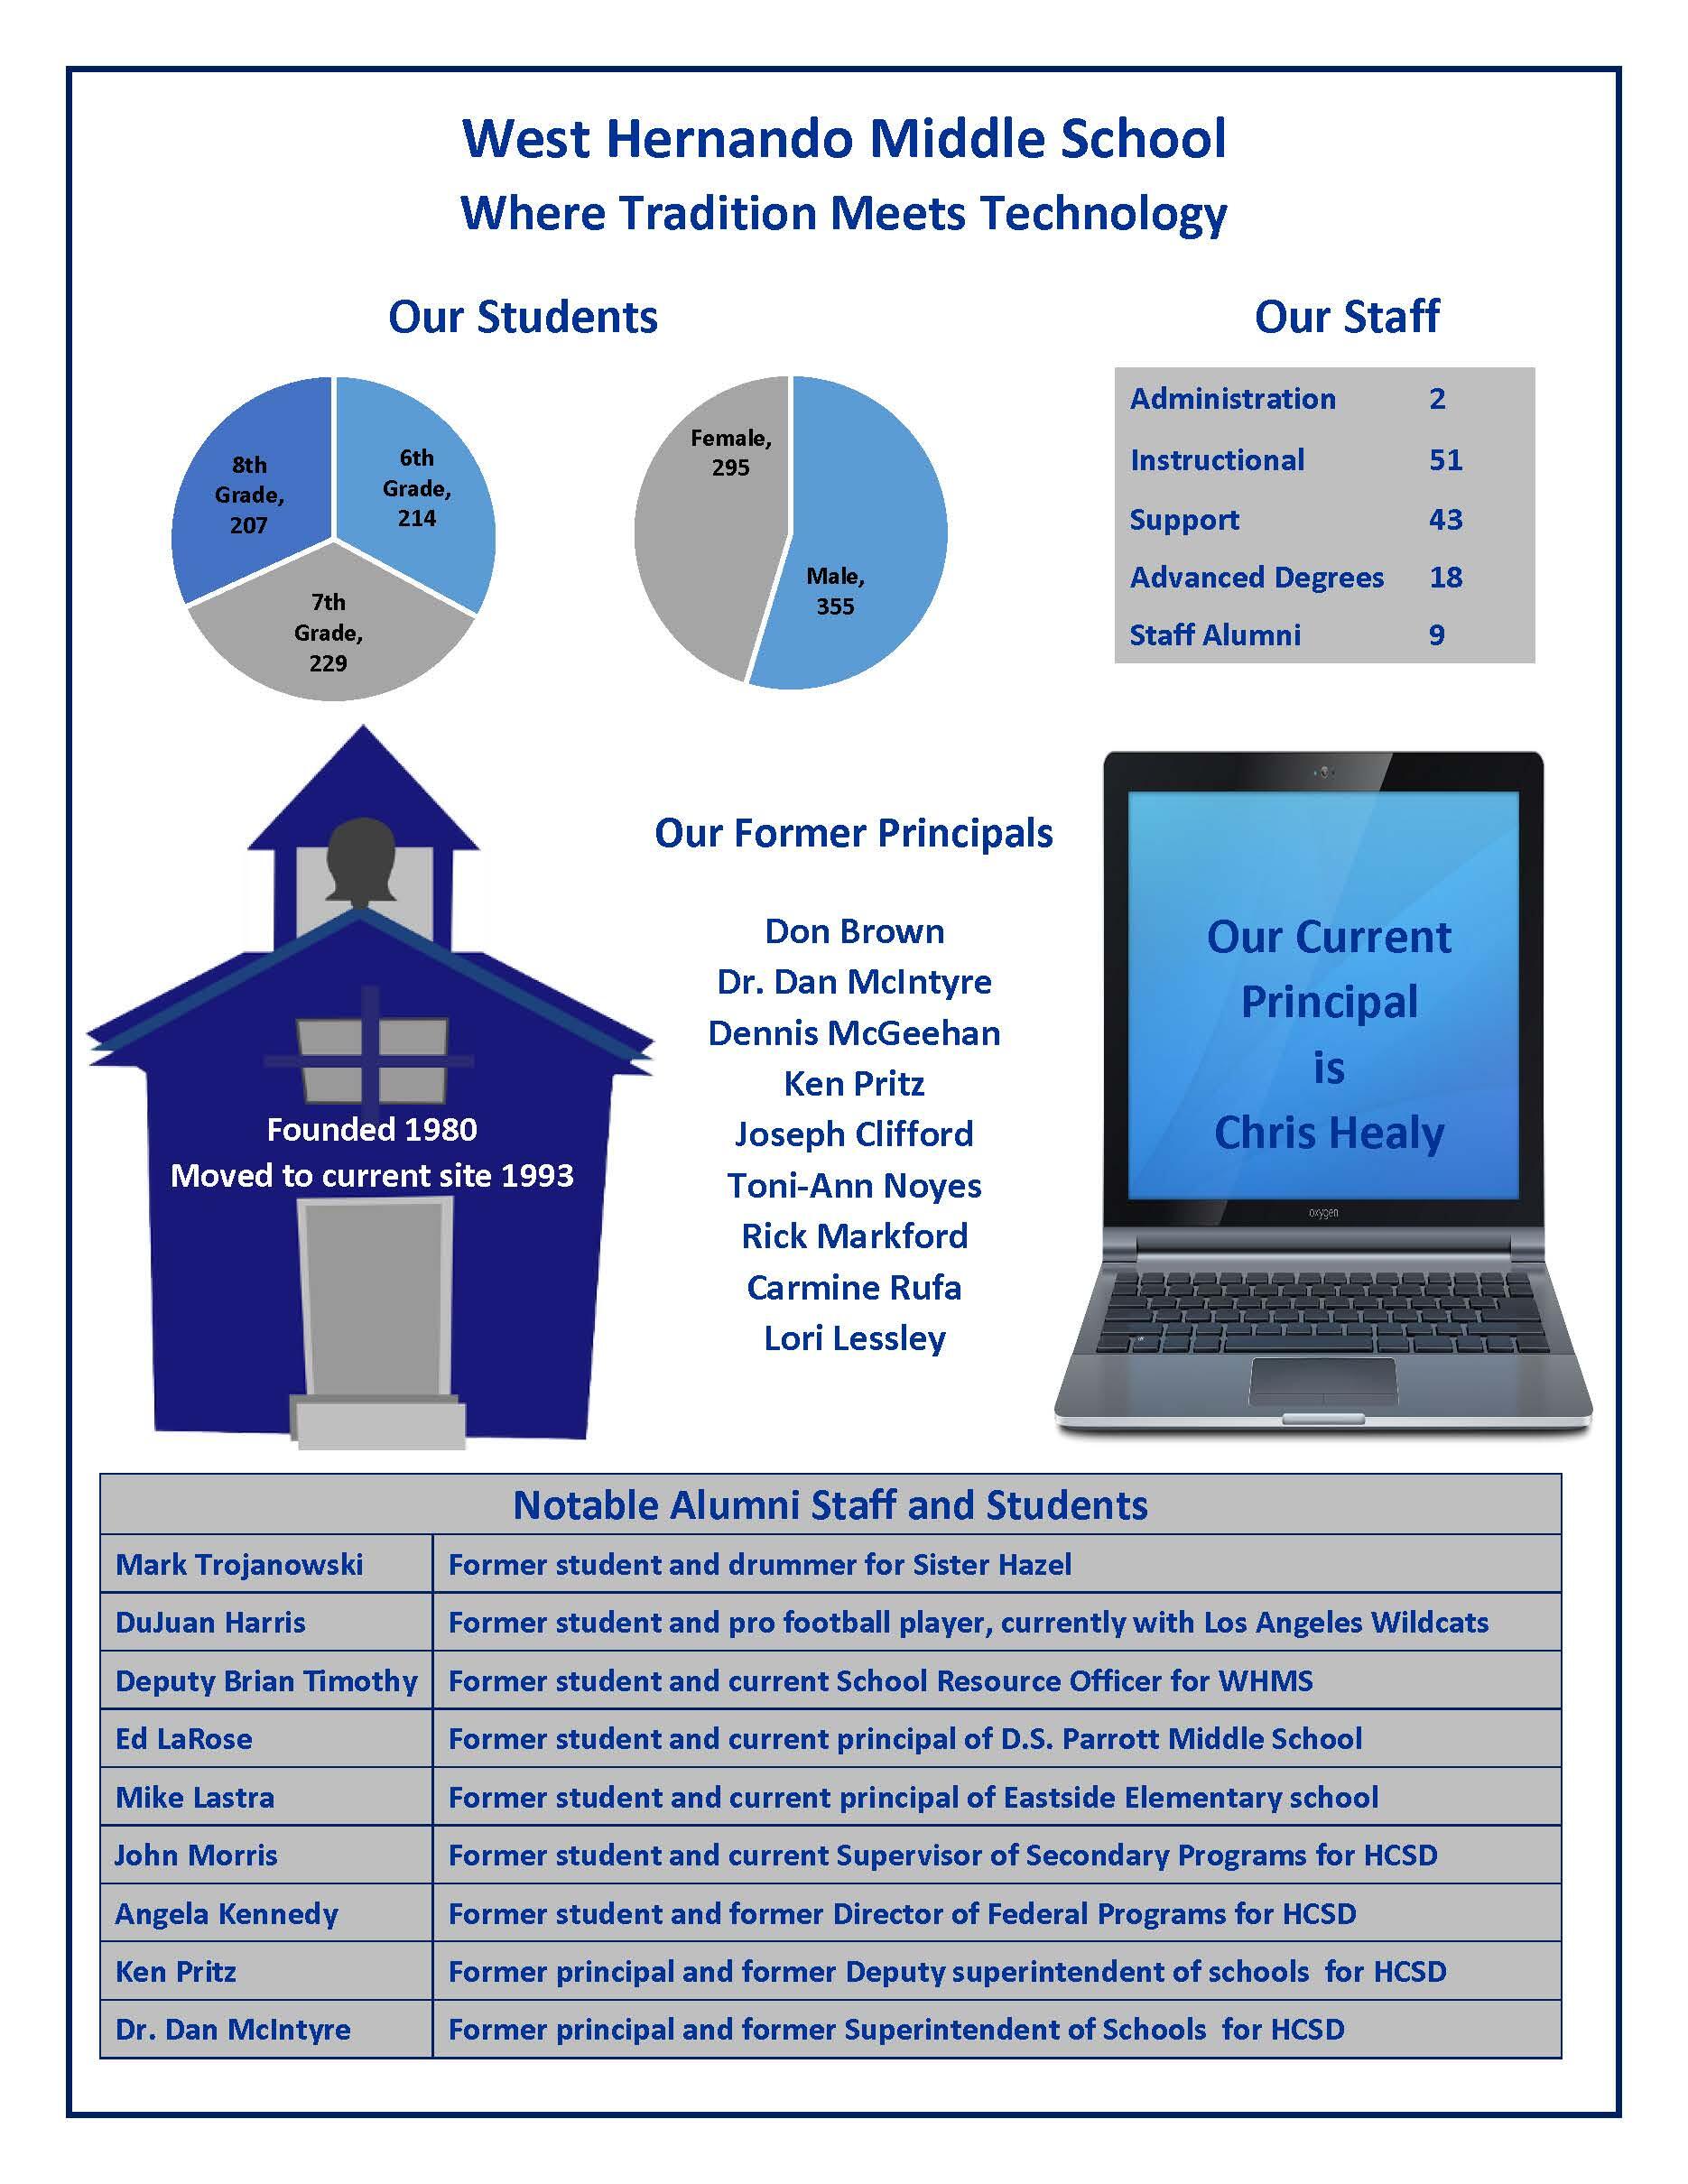 West Hernando Middle School Fact Sheet